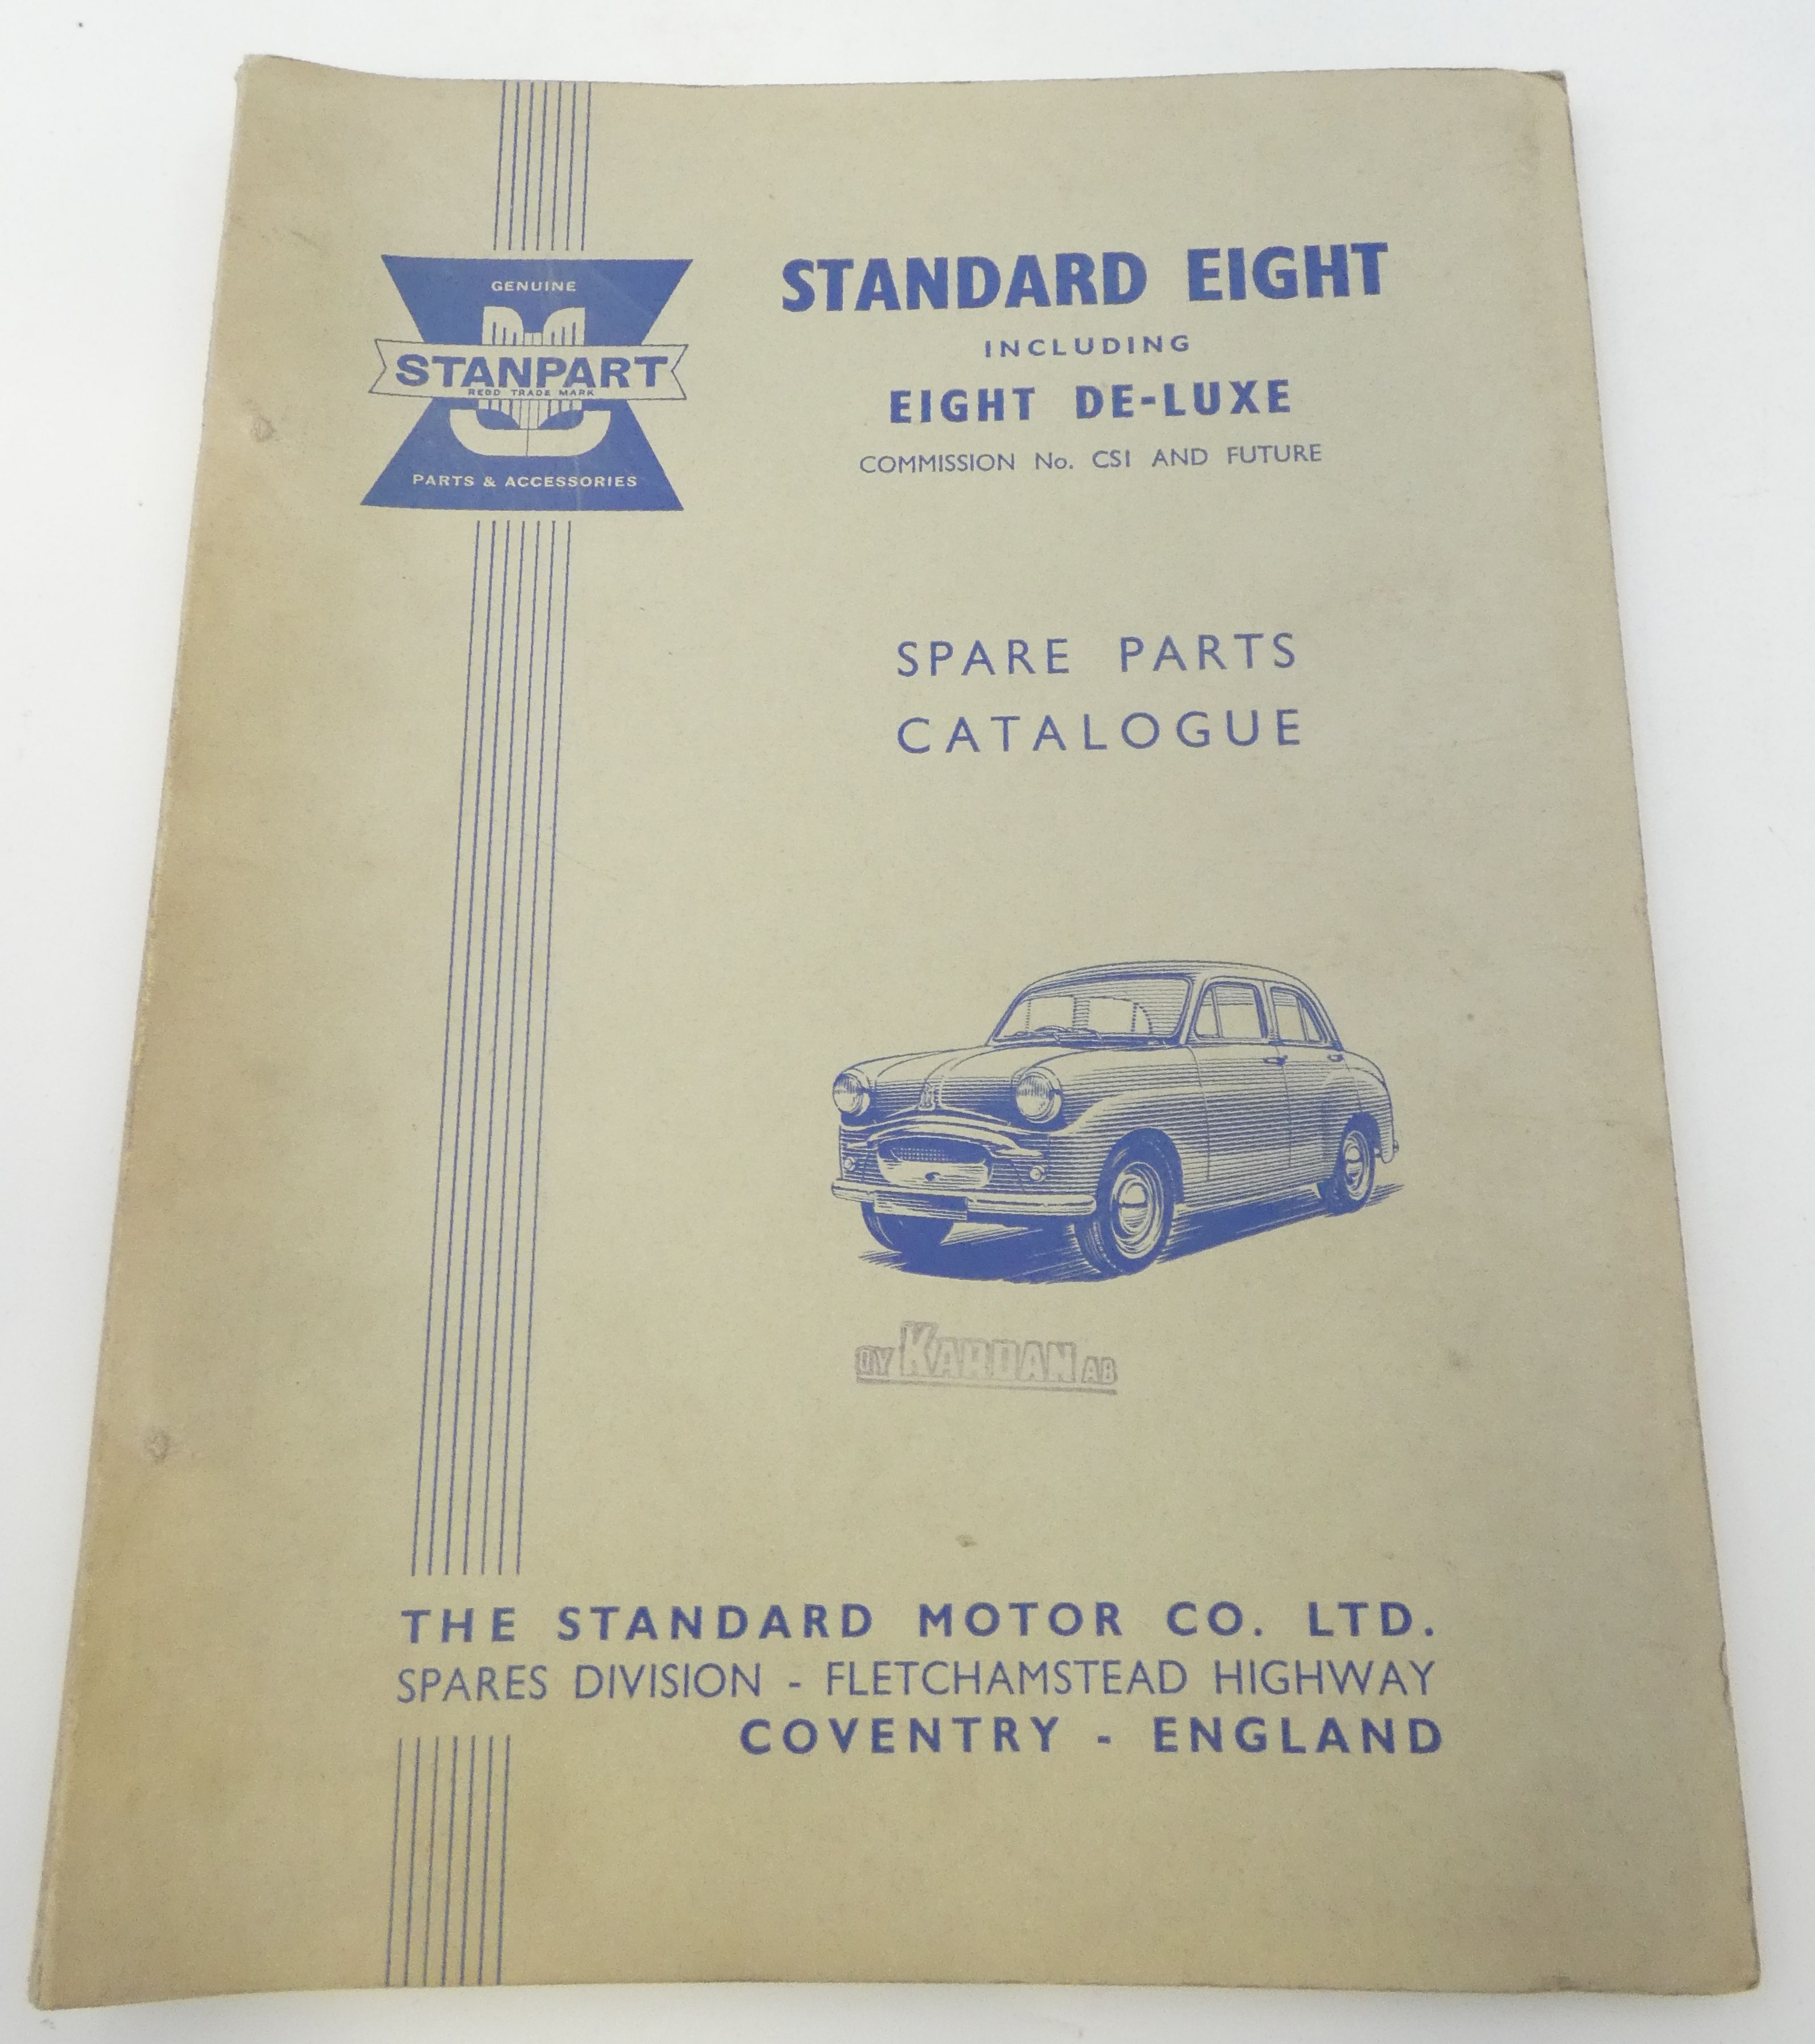 Standard Eight (including Eight de-luxe) spare parts catalogue